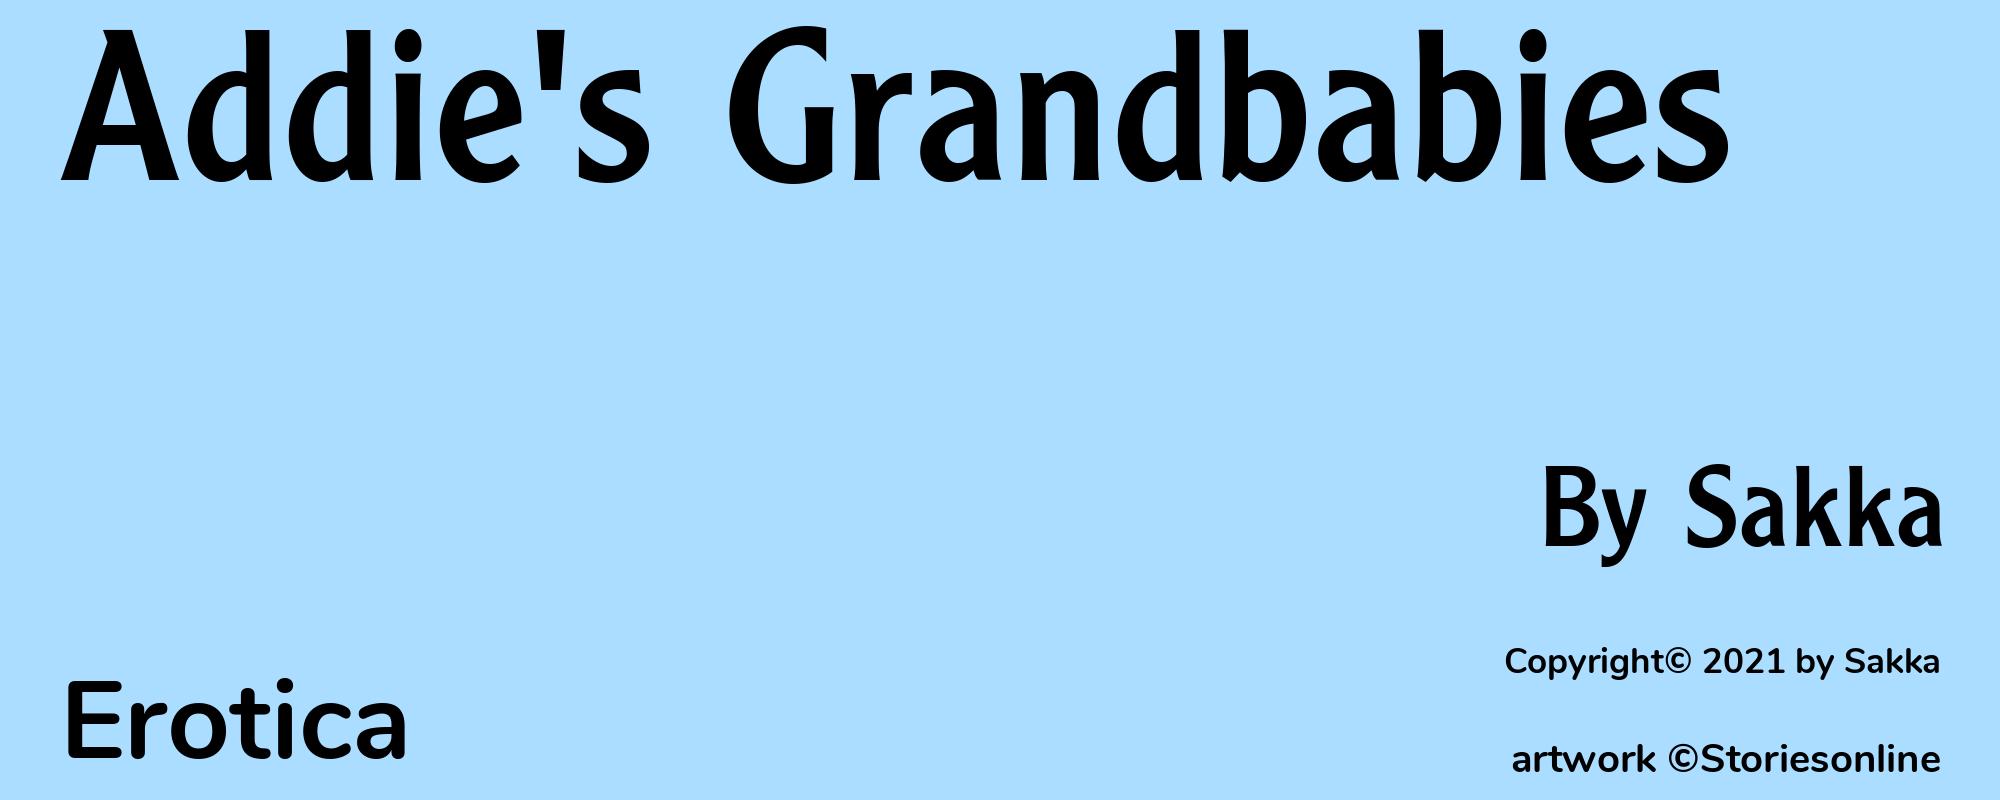 Addie's Grandbabies - Cover